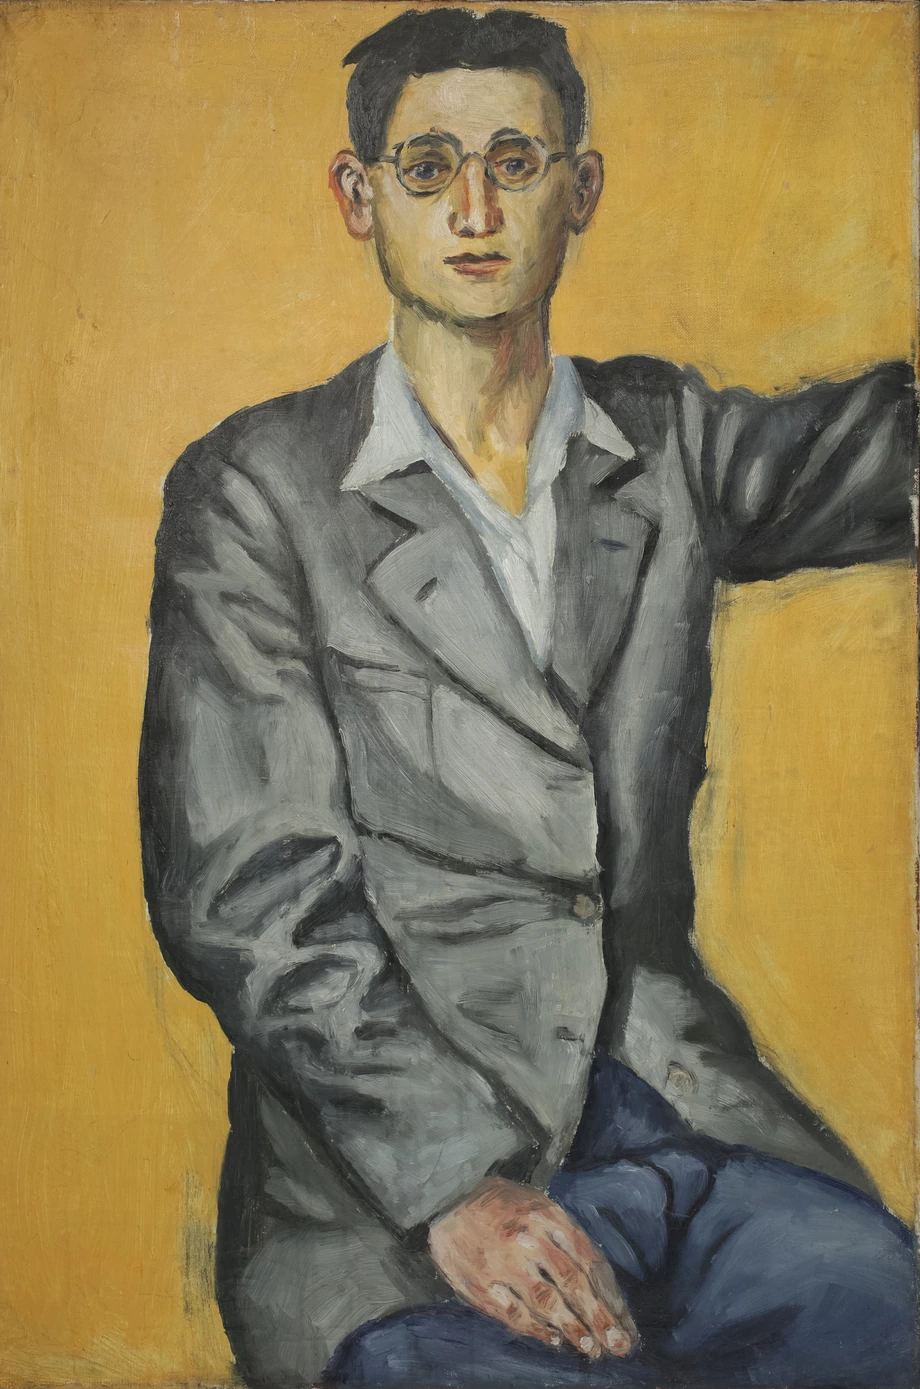 Autoportret, [Autoportret na żółtym tle], 1949, olej, płótno, 92×62 cm, Starak Collection